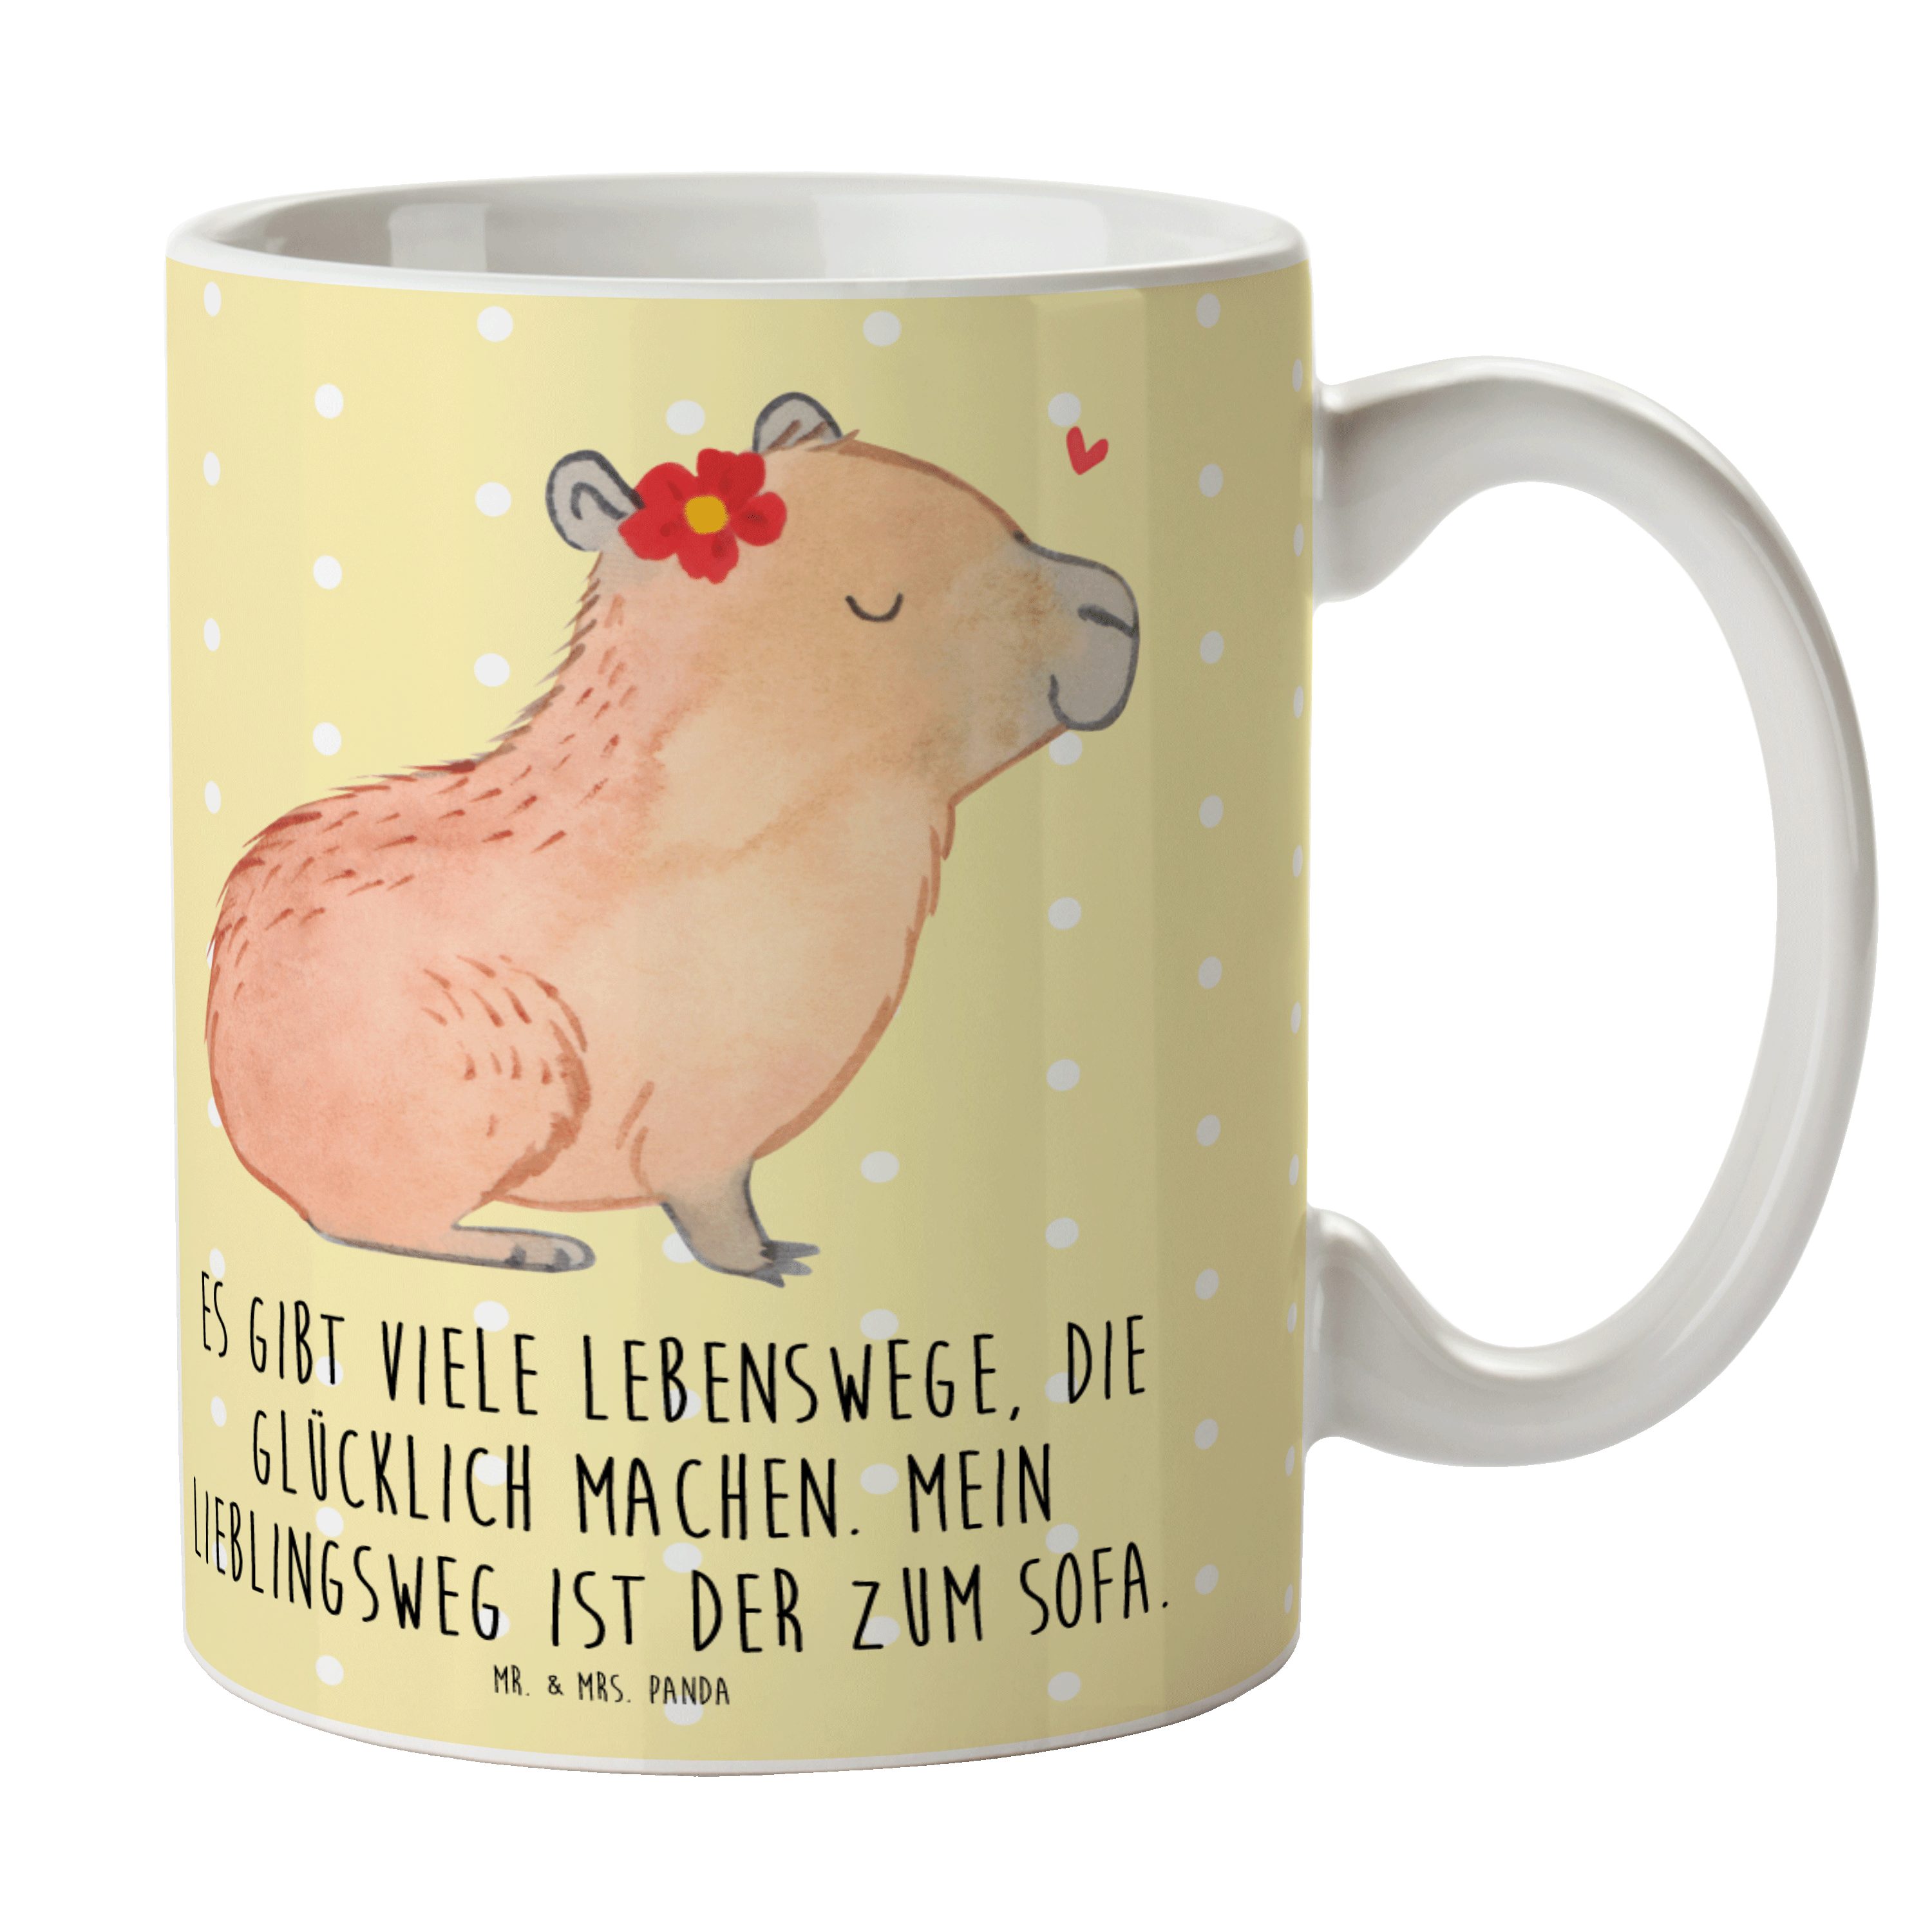 Mr. & Mrs. Panda Tasse Capybara Blume - Gelb Pastell - Geschenk, Teetasse, Gute Laune, Tiere, Keramik